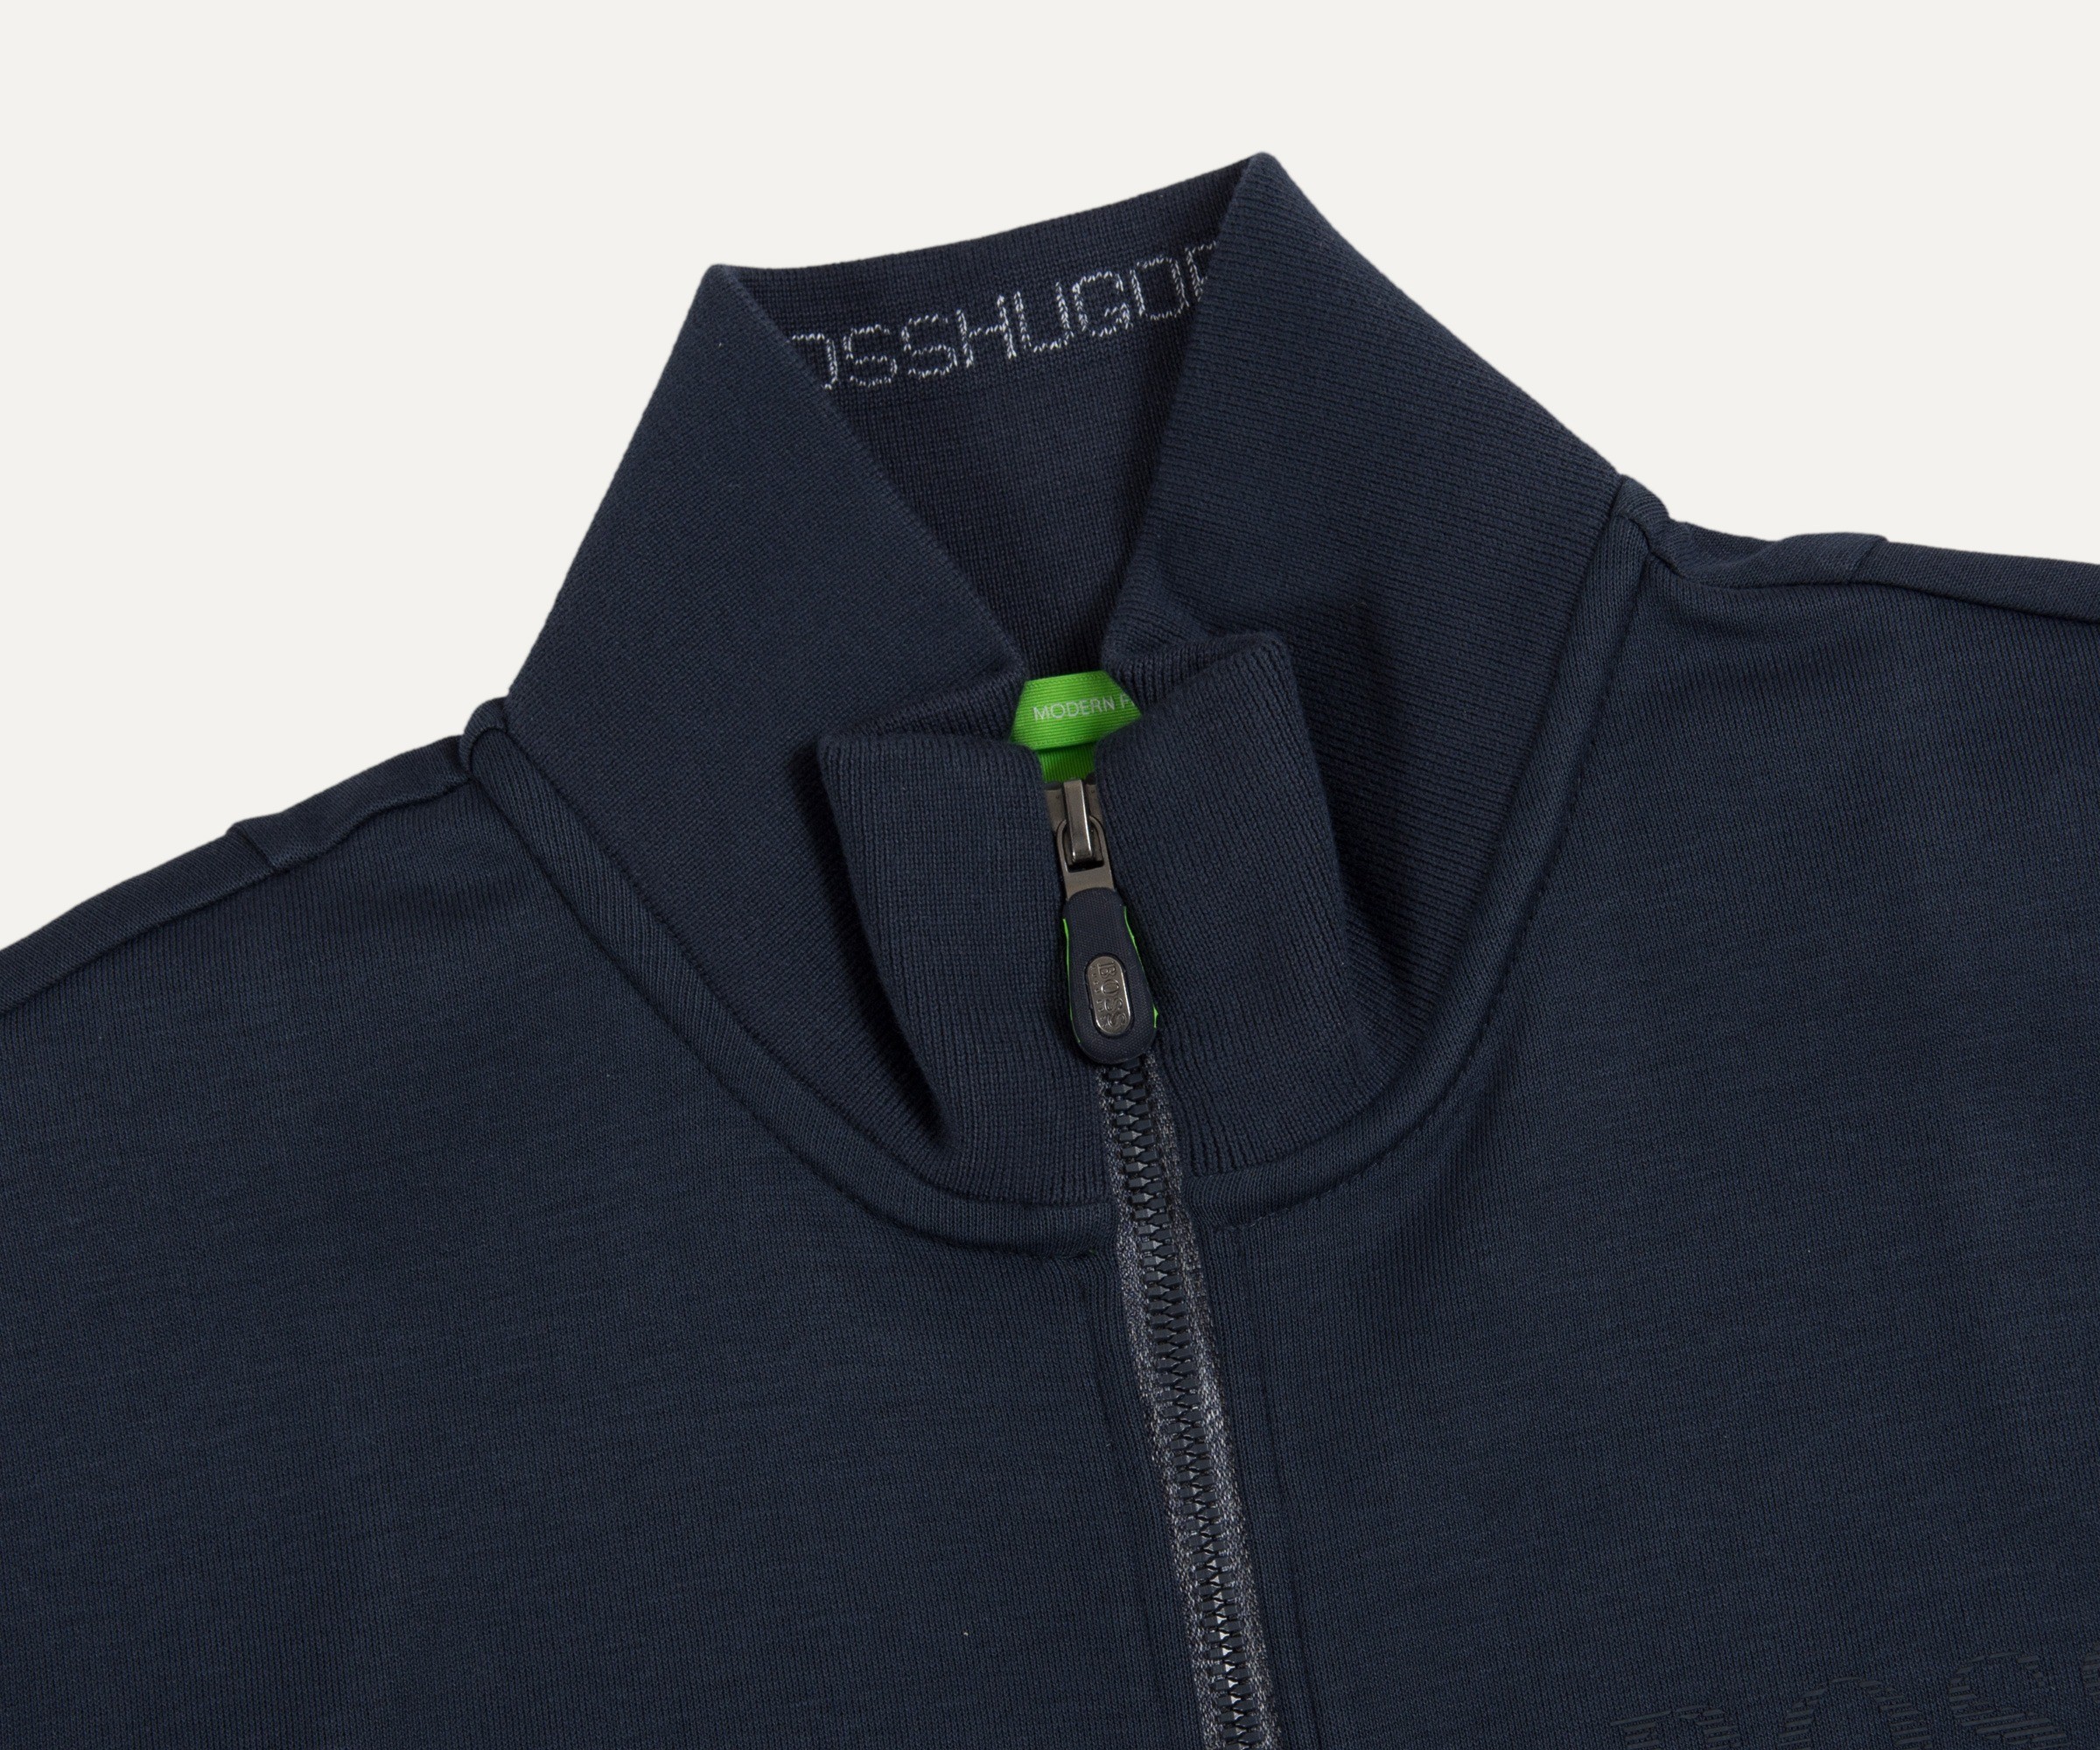 Hugo Boss Green 'Skaz' Full Zip Collared Sweatshirt Navy